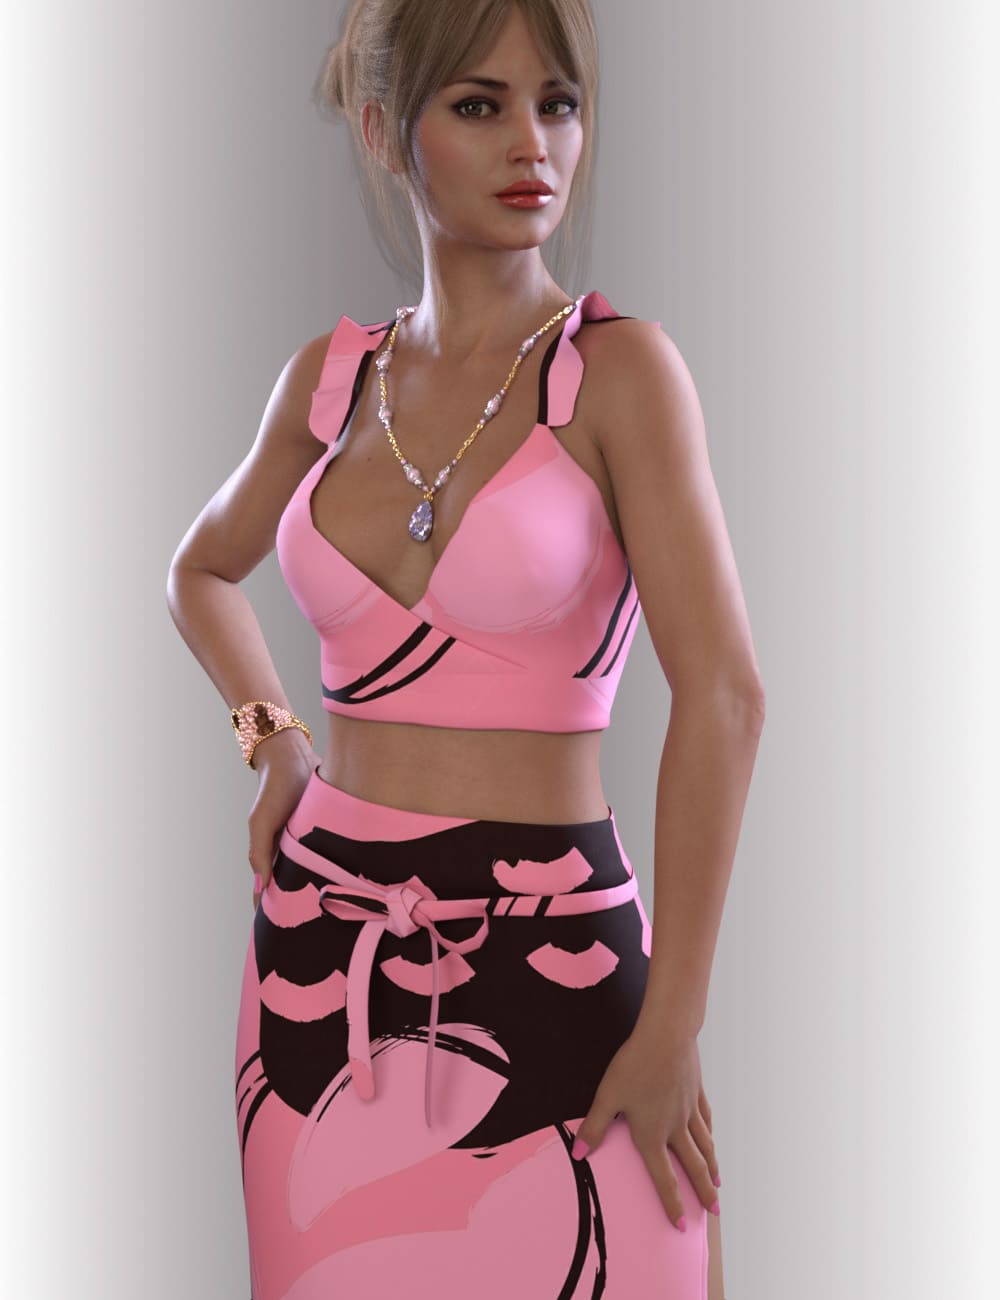 dForce Zara Homewear for Genesis 8.1 Females_DAZ3D下载站